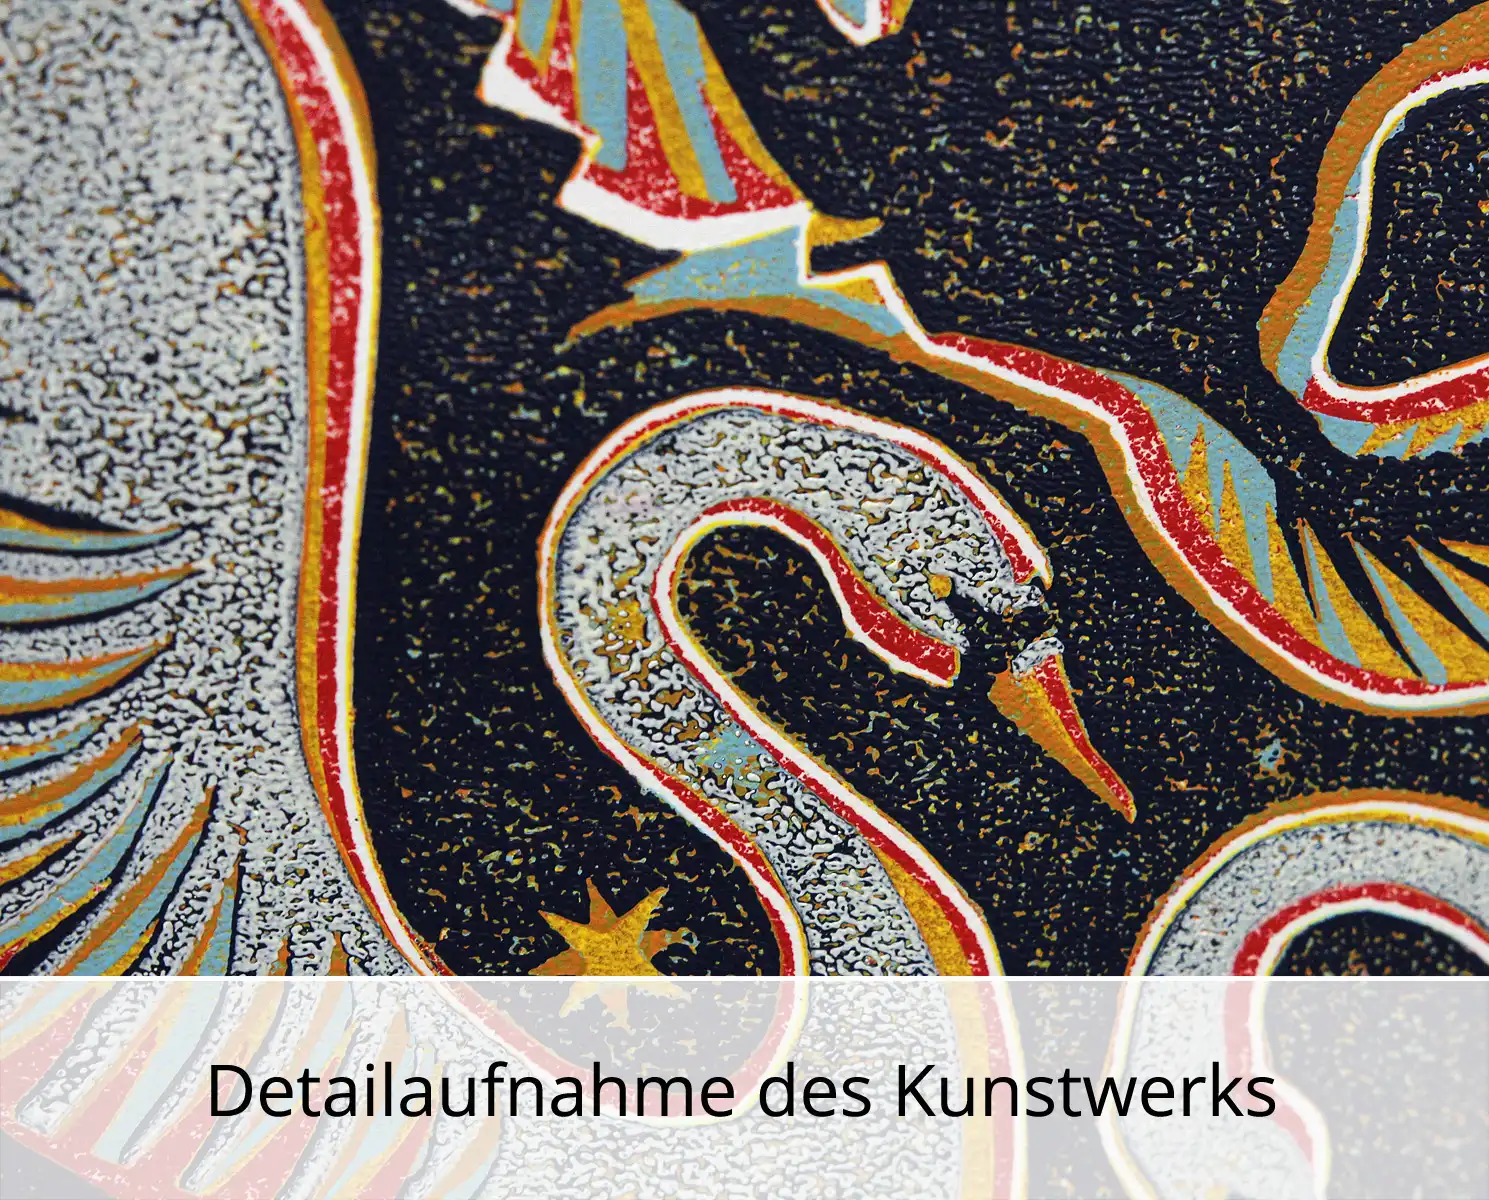 F.O. Haake: "Drei Schwäne, Nr. 15/22", originale Grafik/serielles Unikat, mehrfarbiger Linoldruck